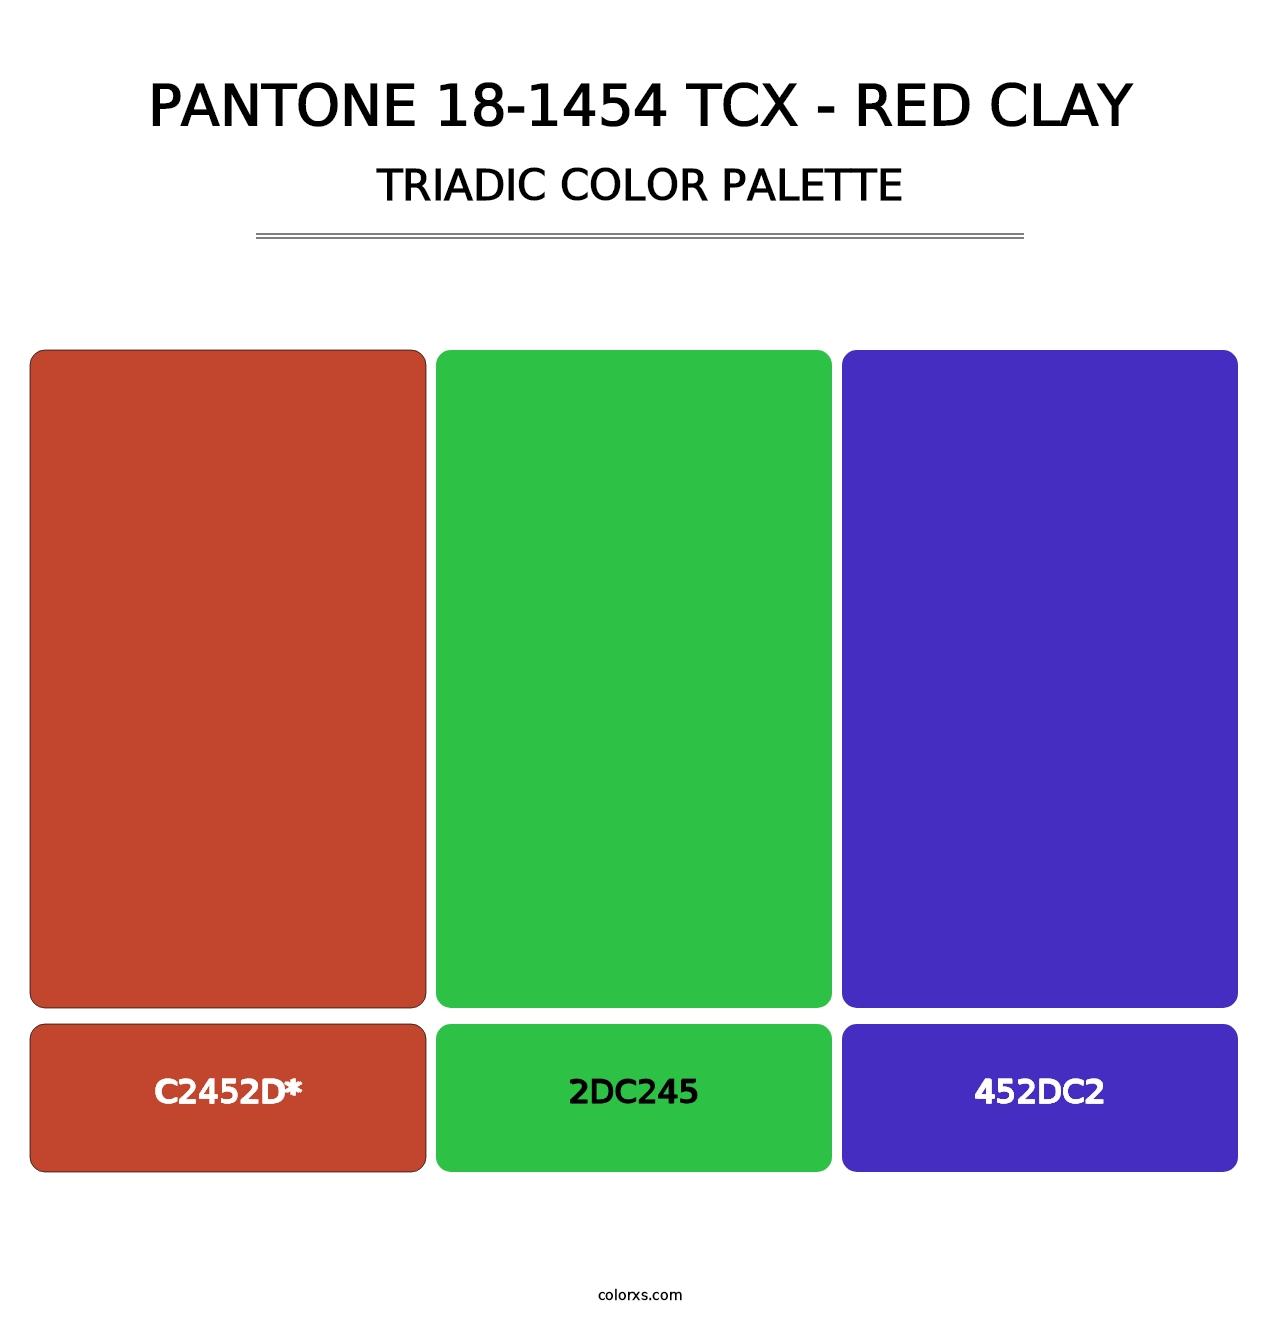 PANTONE 18-1454 TCX - Red Clay - Triadic Color Palette